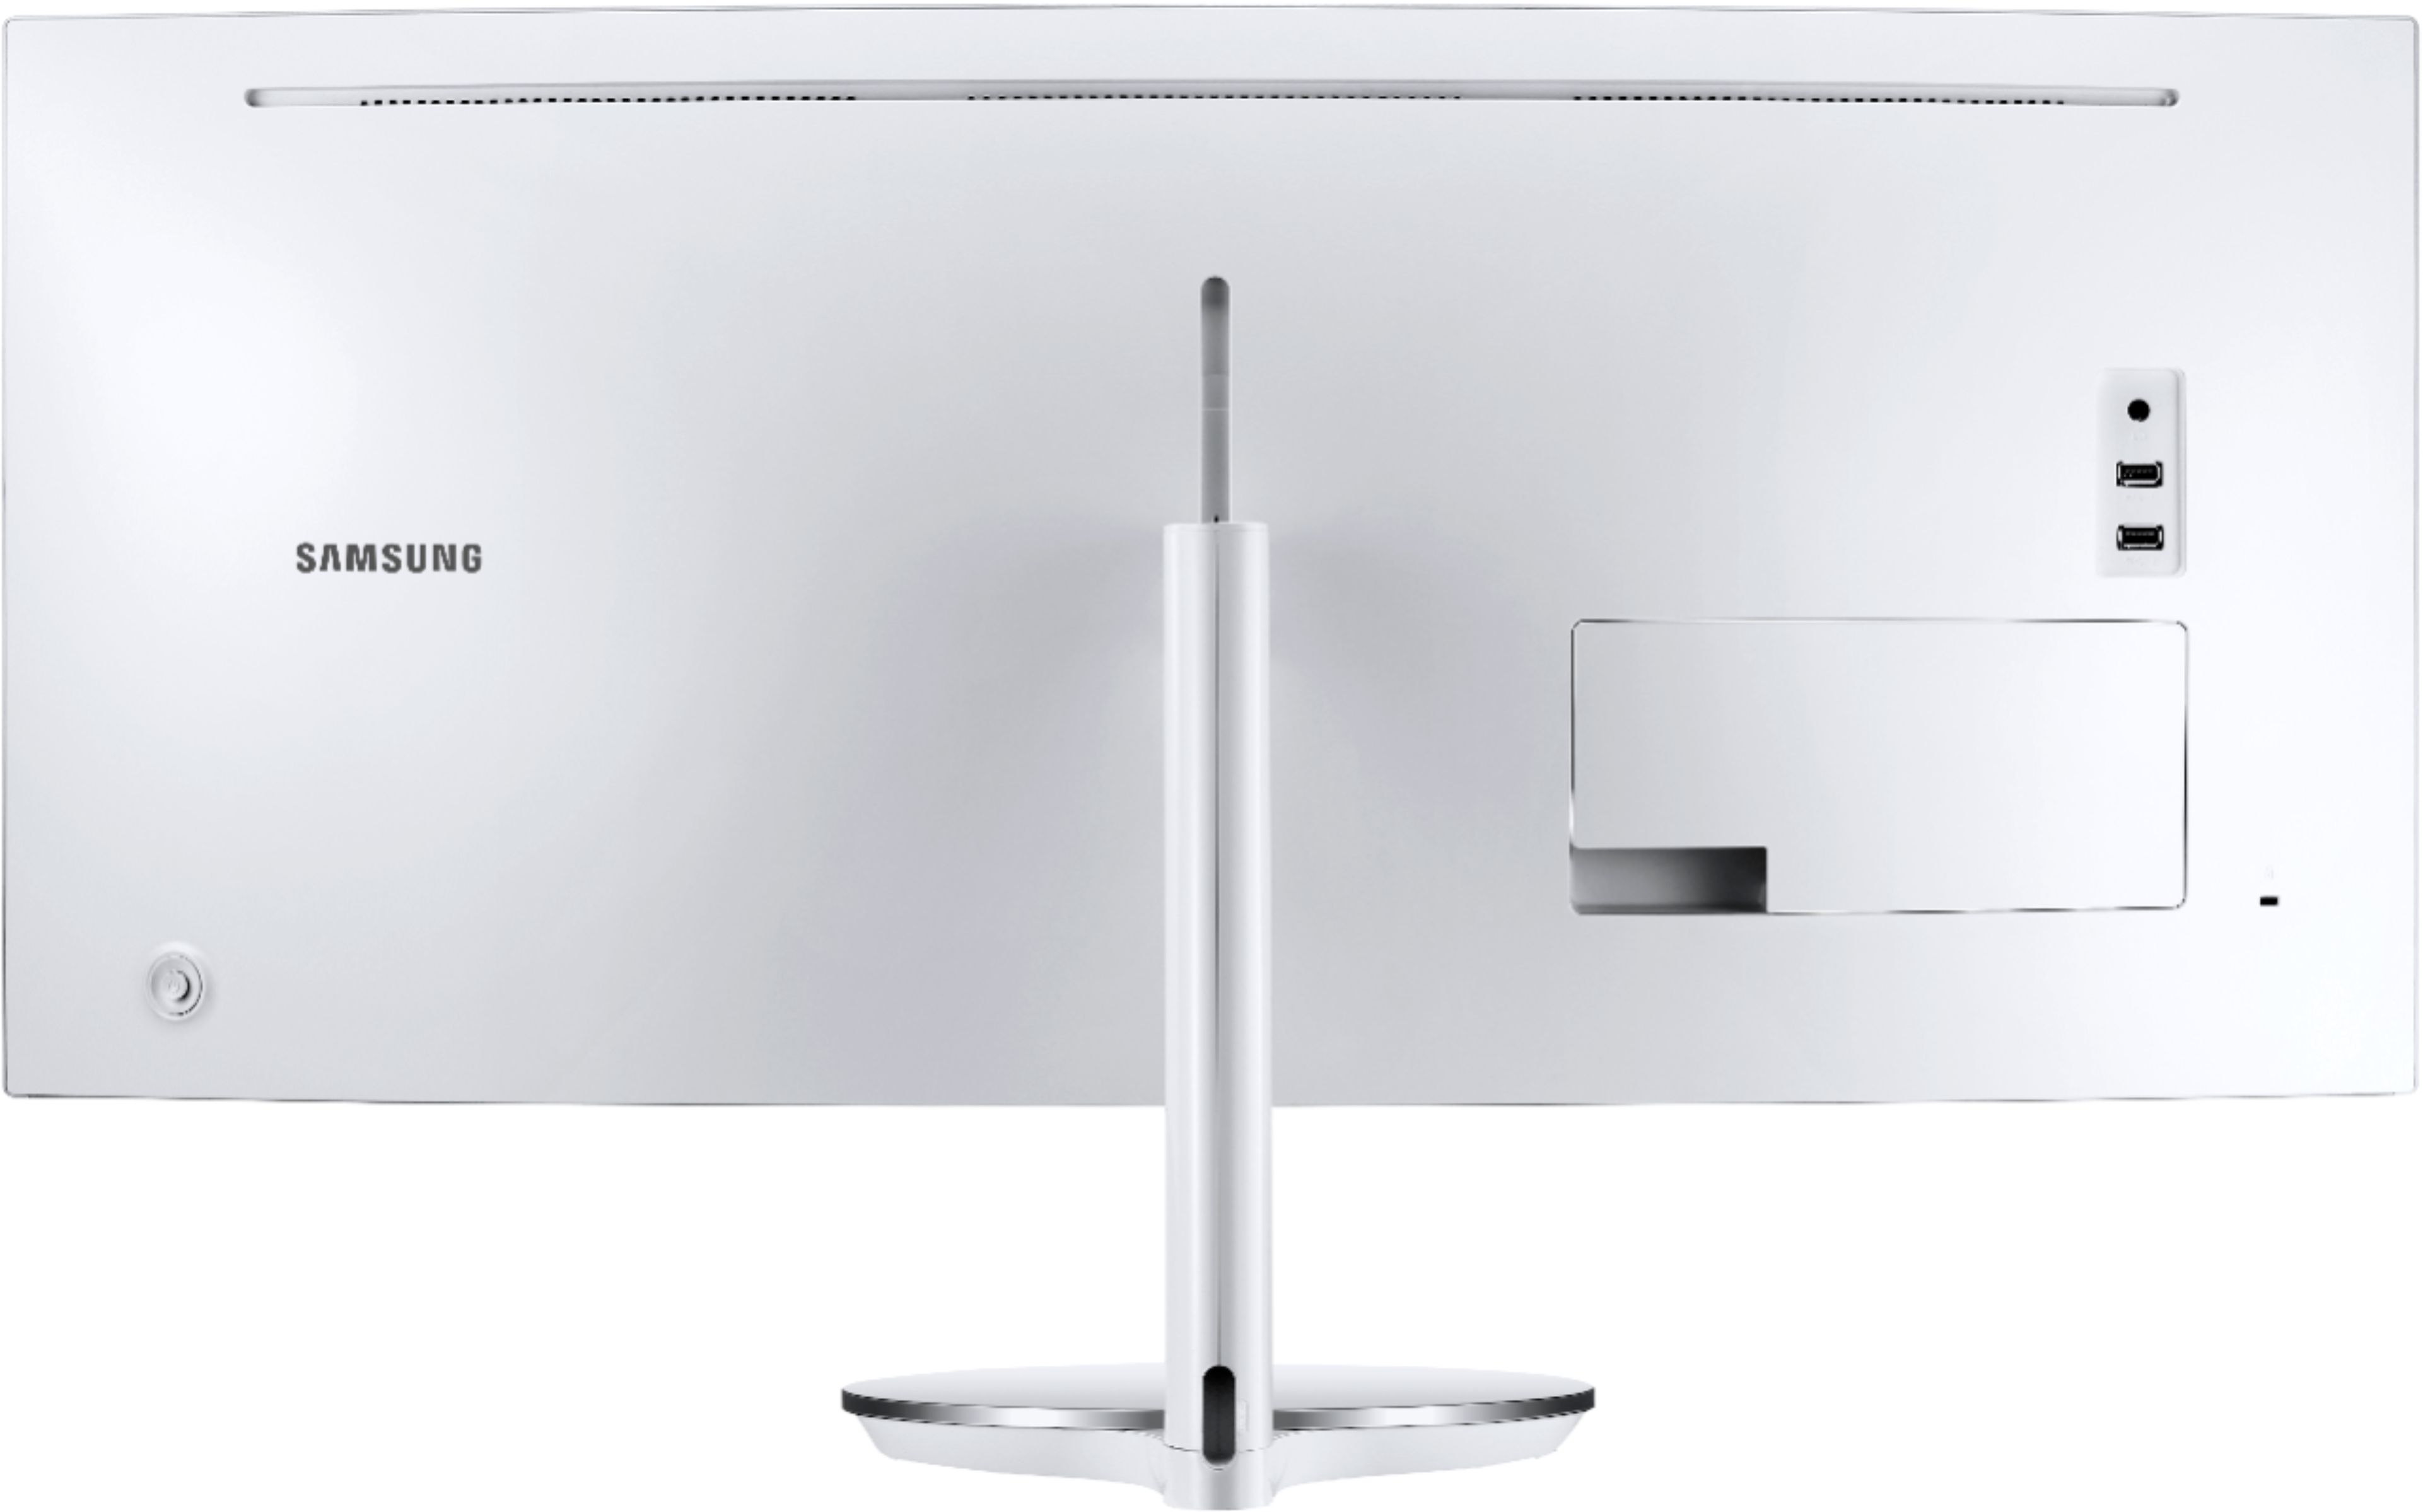 Back View: Samsung - 34" LED Curved QHD FreeSync Monitor (DVI, DisplayPort, HDMI, USB) - White/Silver